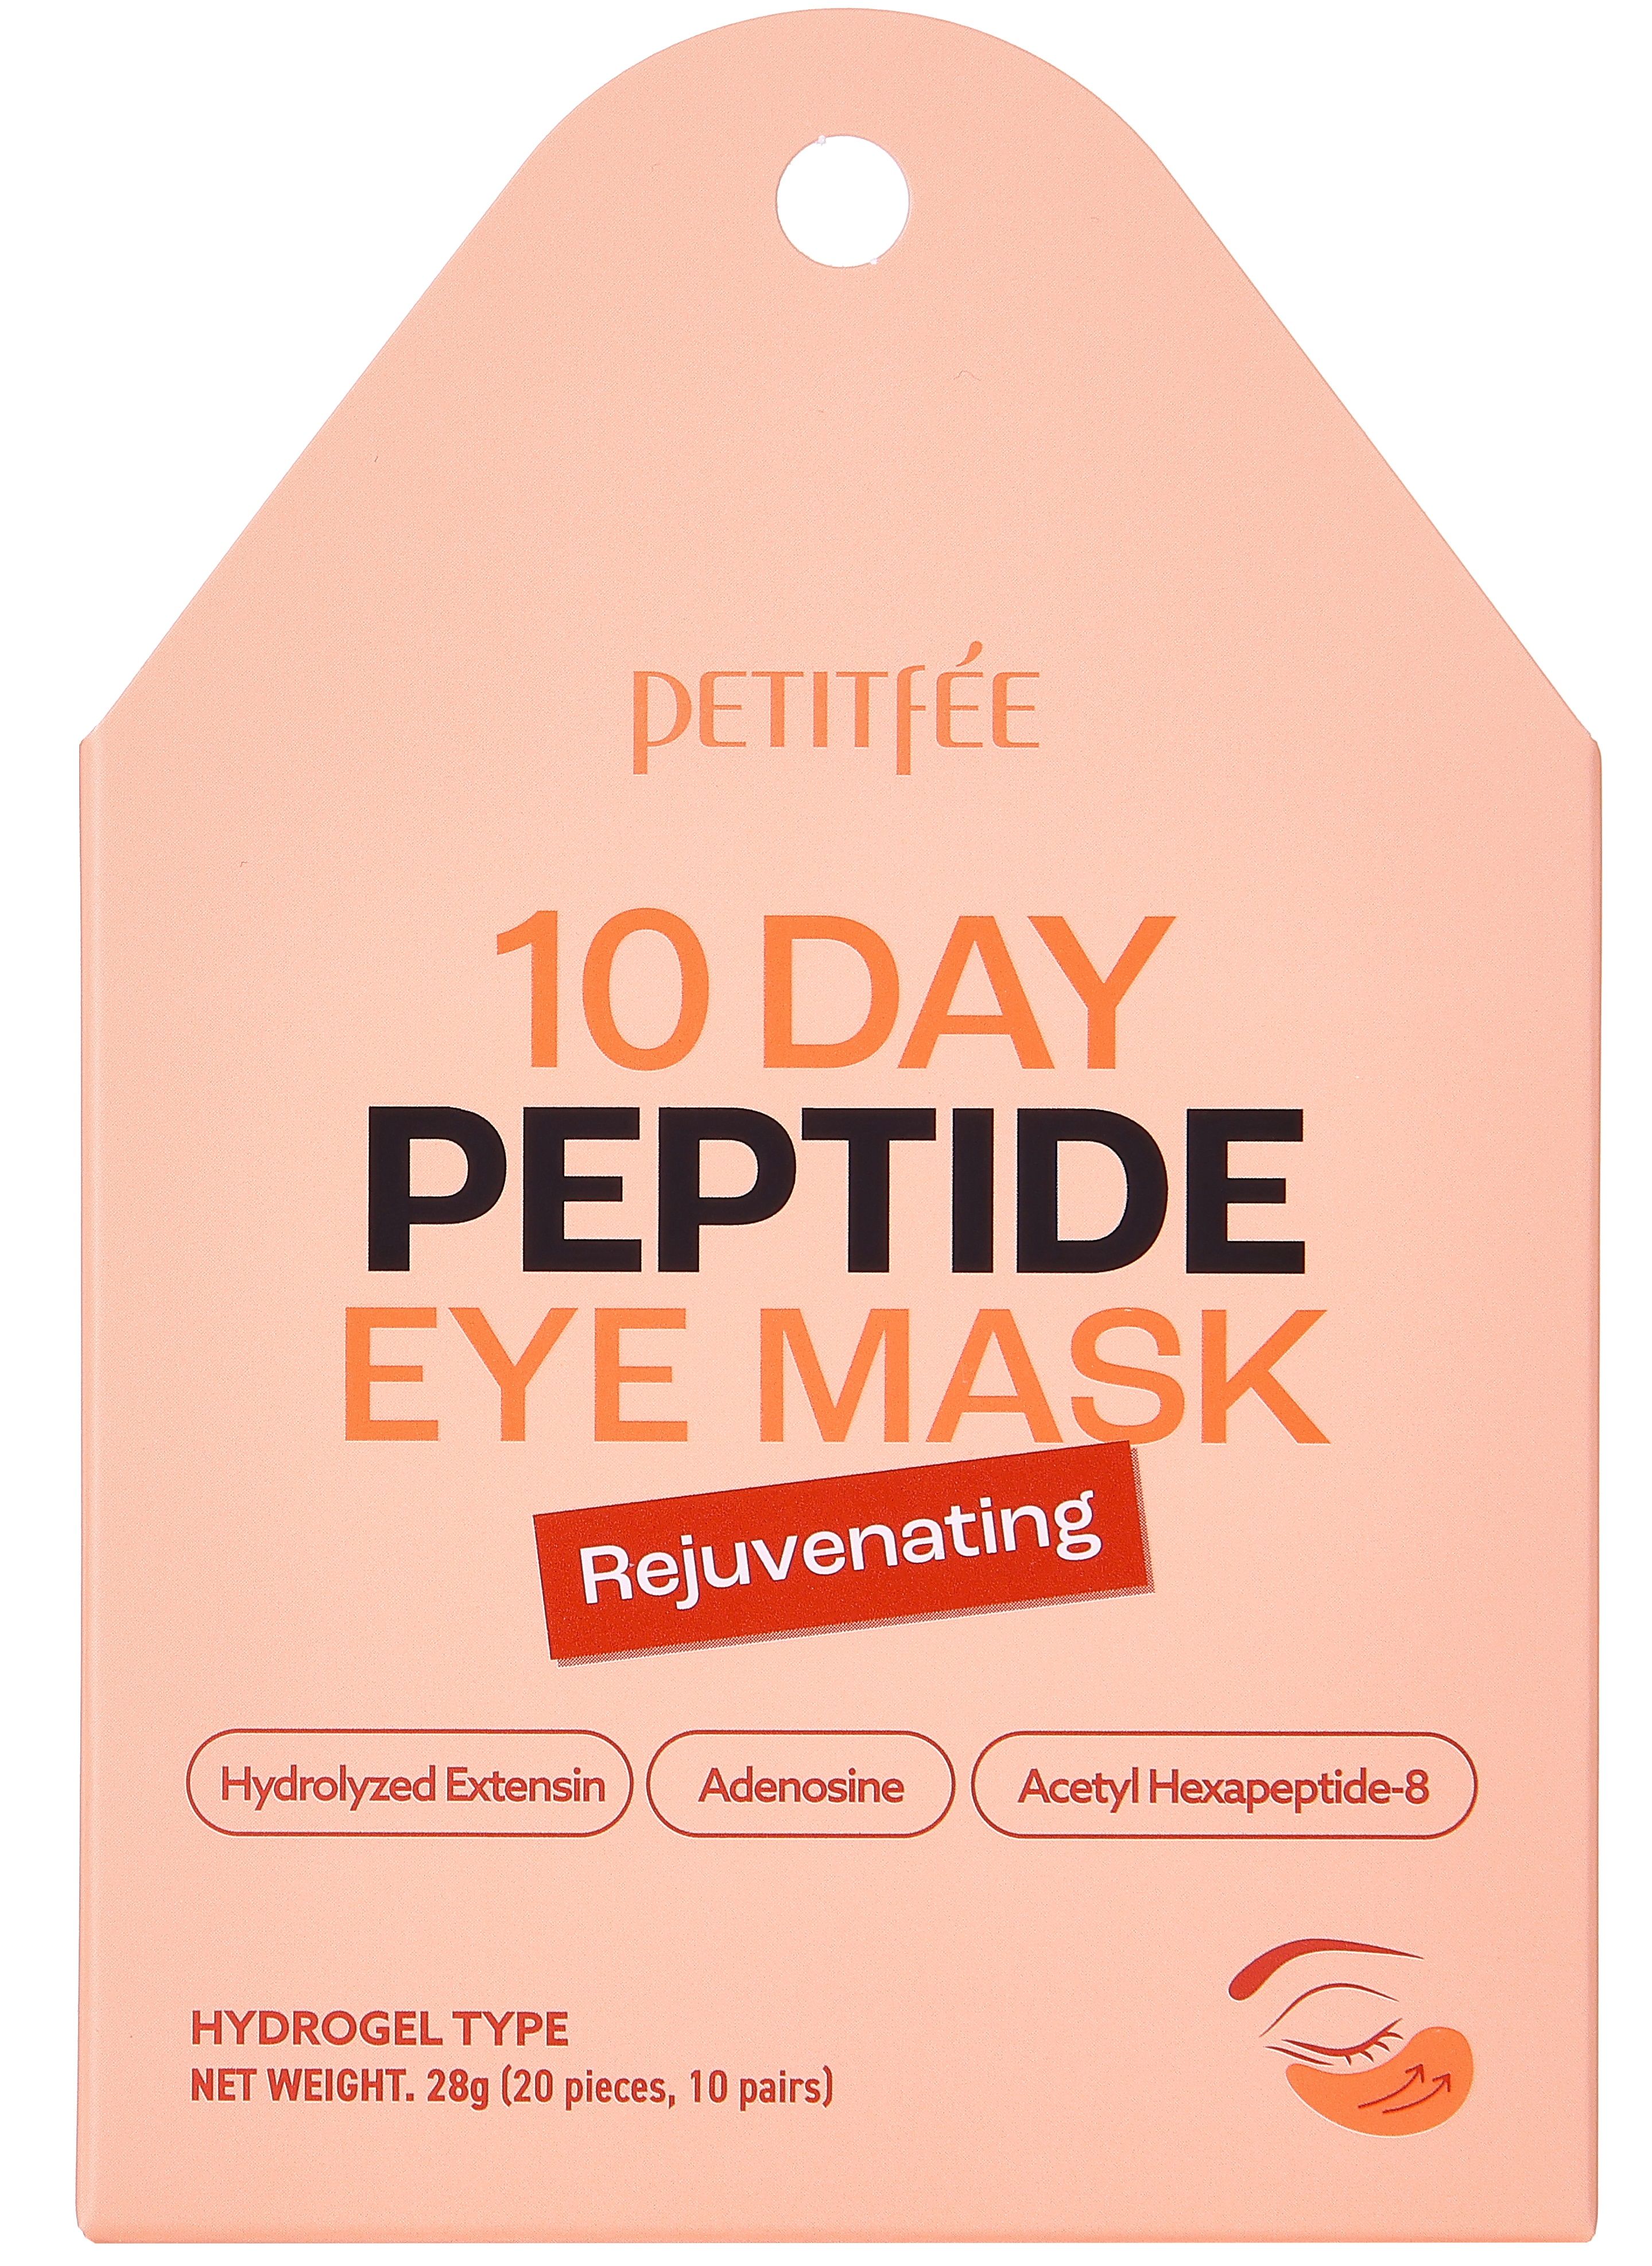 Petitfee  Koelf 10 Day Peptide Eye Mask Rejuvenating 1,4 g * 20 pcs